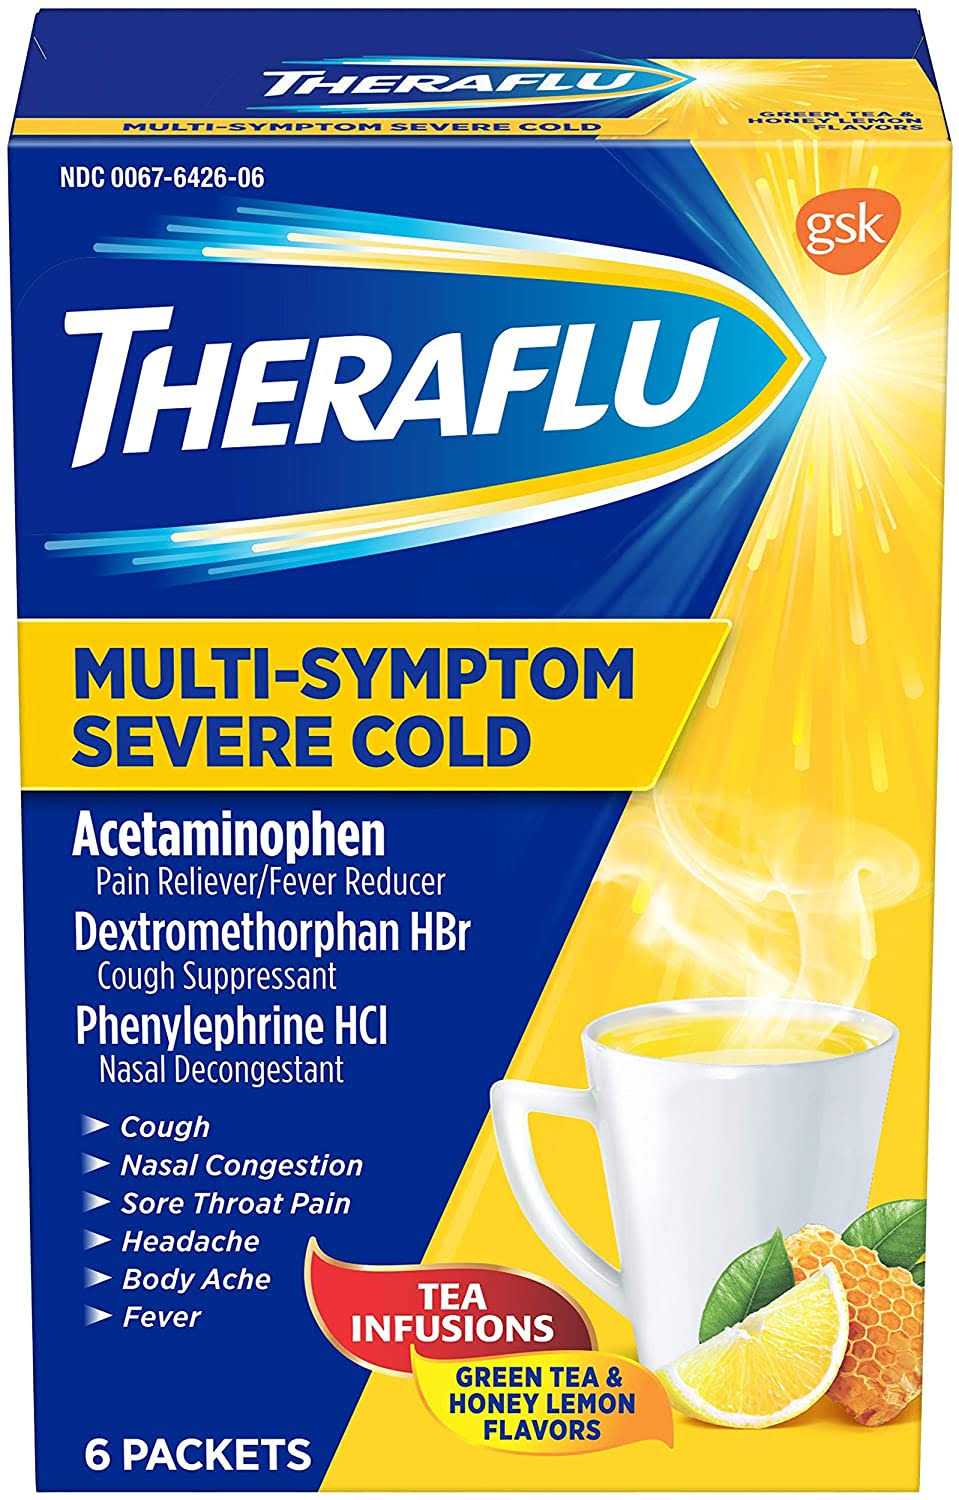 Lipton Theraflu Multi Symptom Severe Cold Packets - Green Tea and Honey Lemon Flavors, 6pk